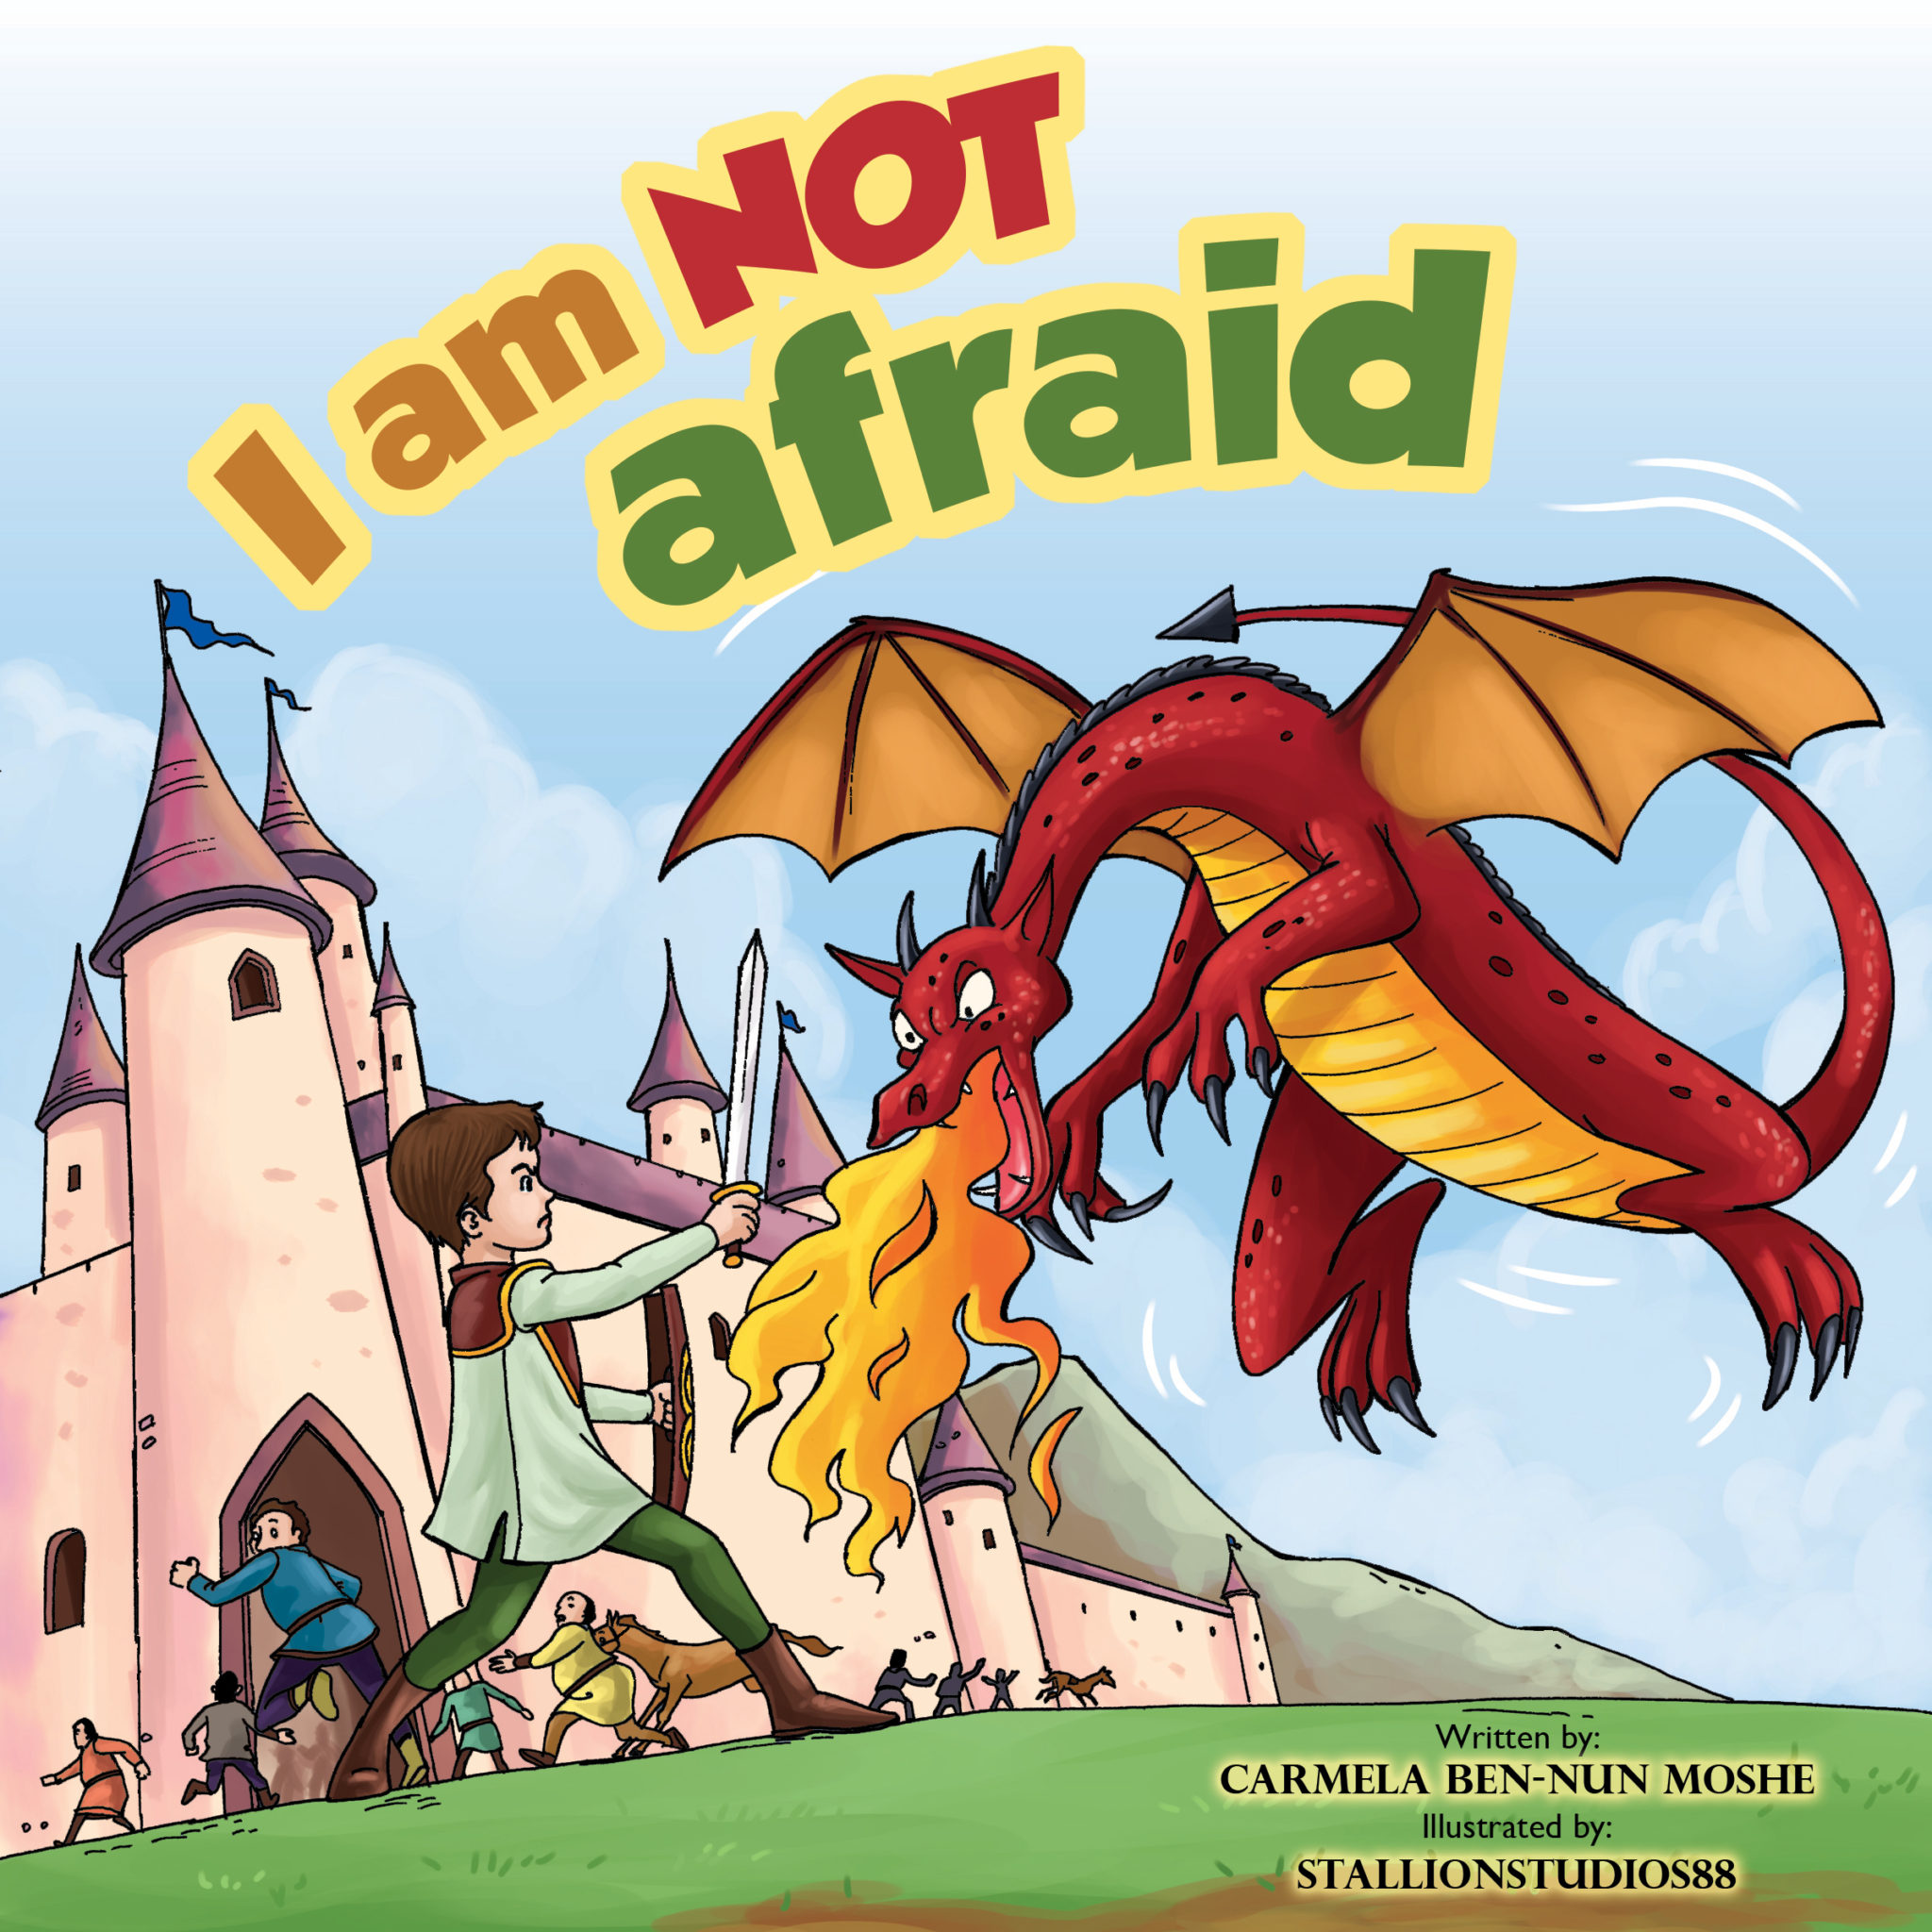 FREE: I am NOT afraid by Carmela Ben-Nun Moshe